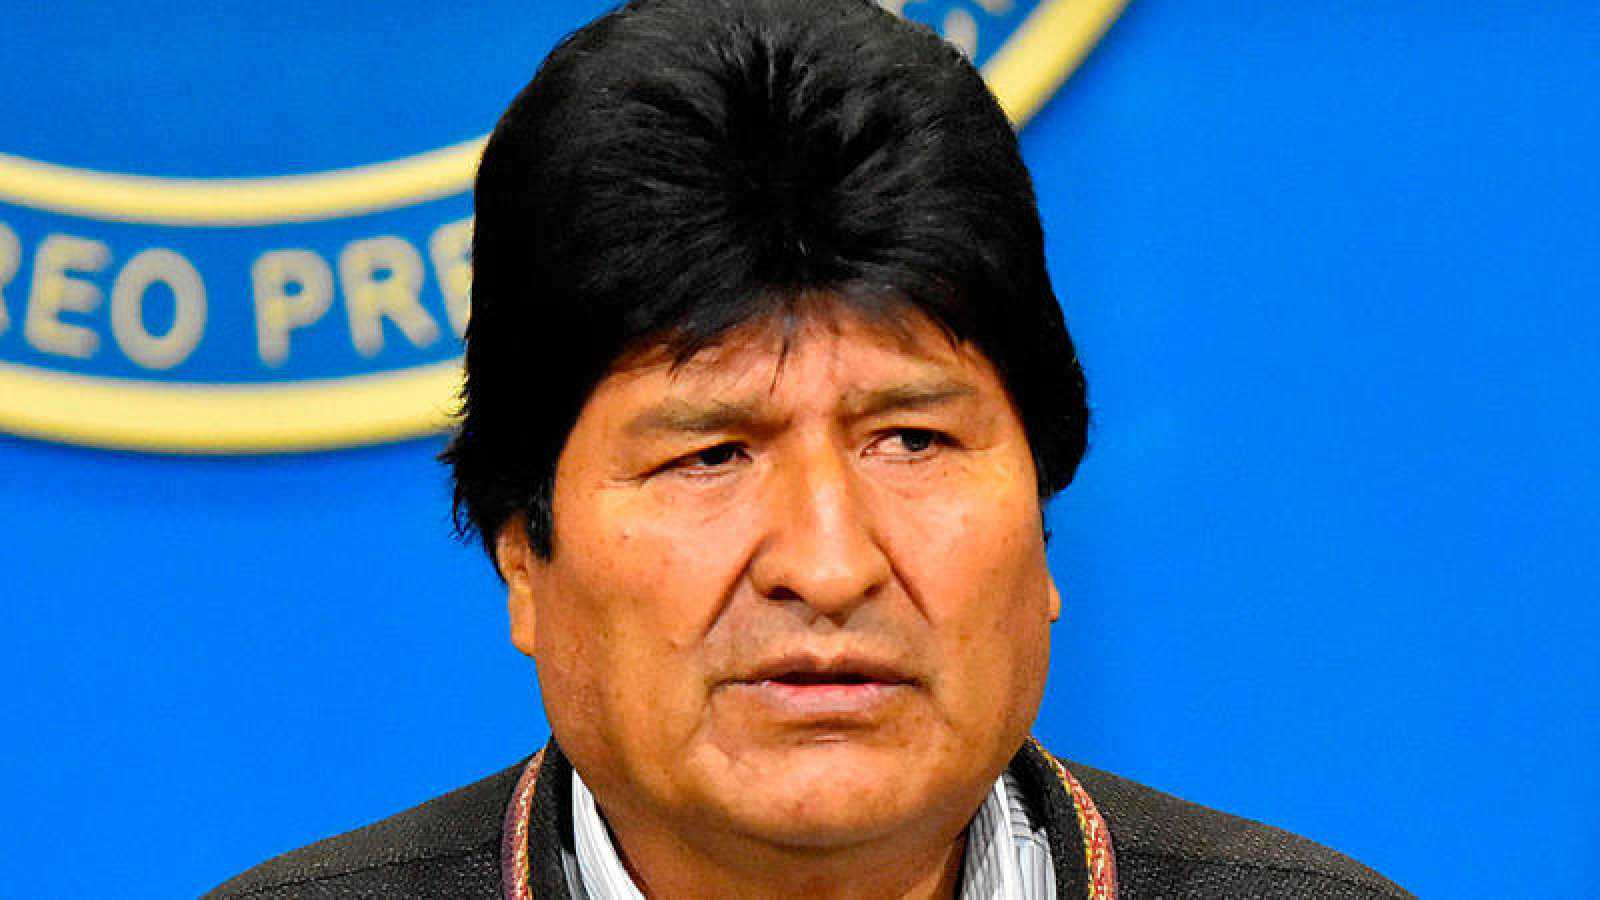 https://www.rtve.es/noticias/20191110/evo-morales-renuncia-presidencia-bolivia-tras-casi-14-anos-poder/1989760.shtml